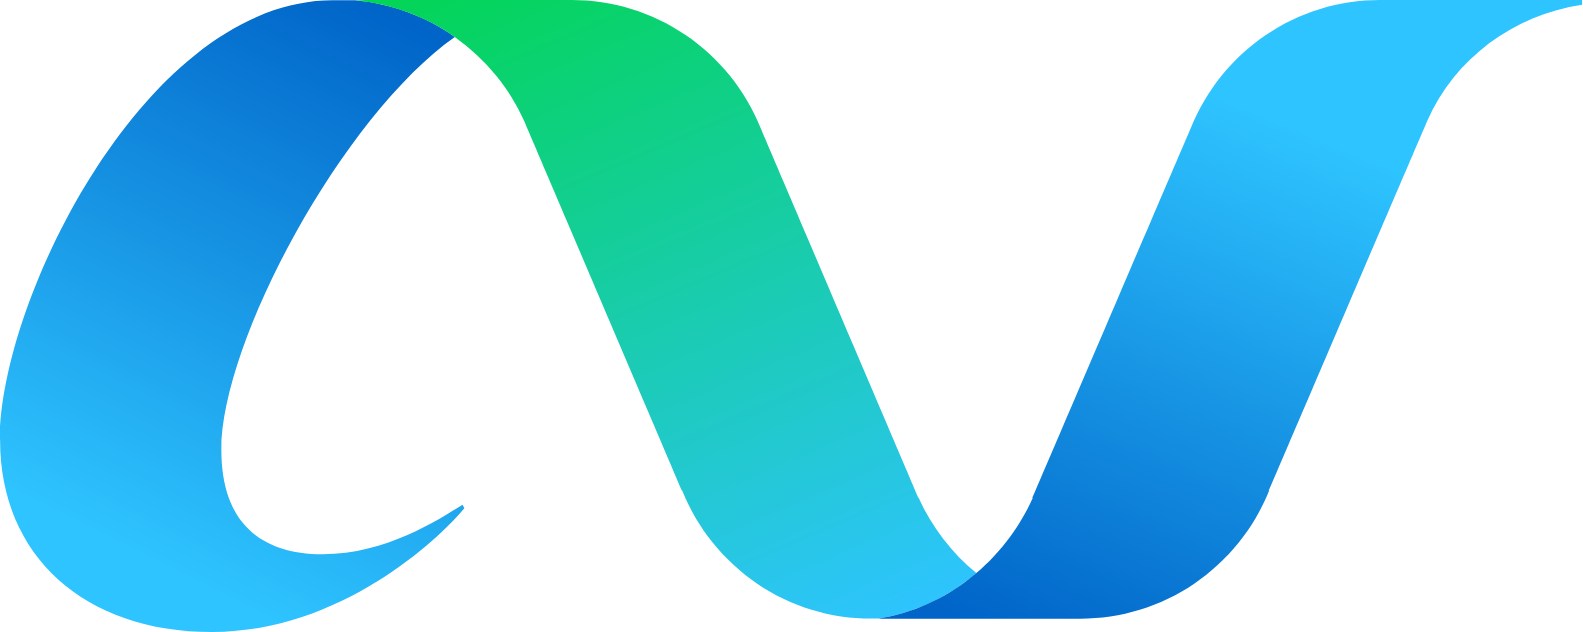 Avantor logo (PNG transparent)